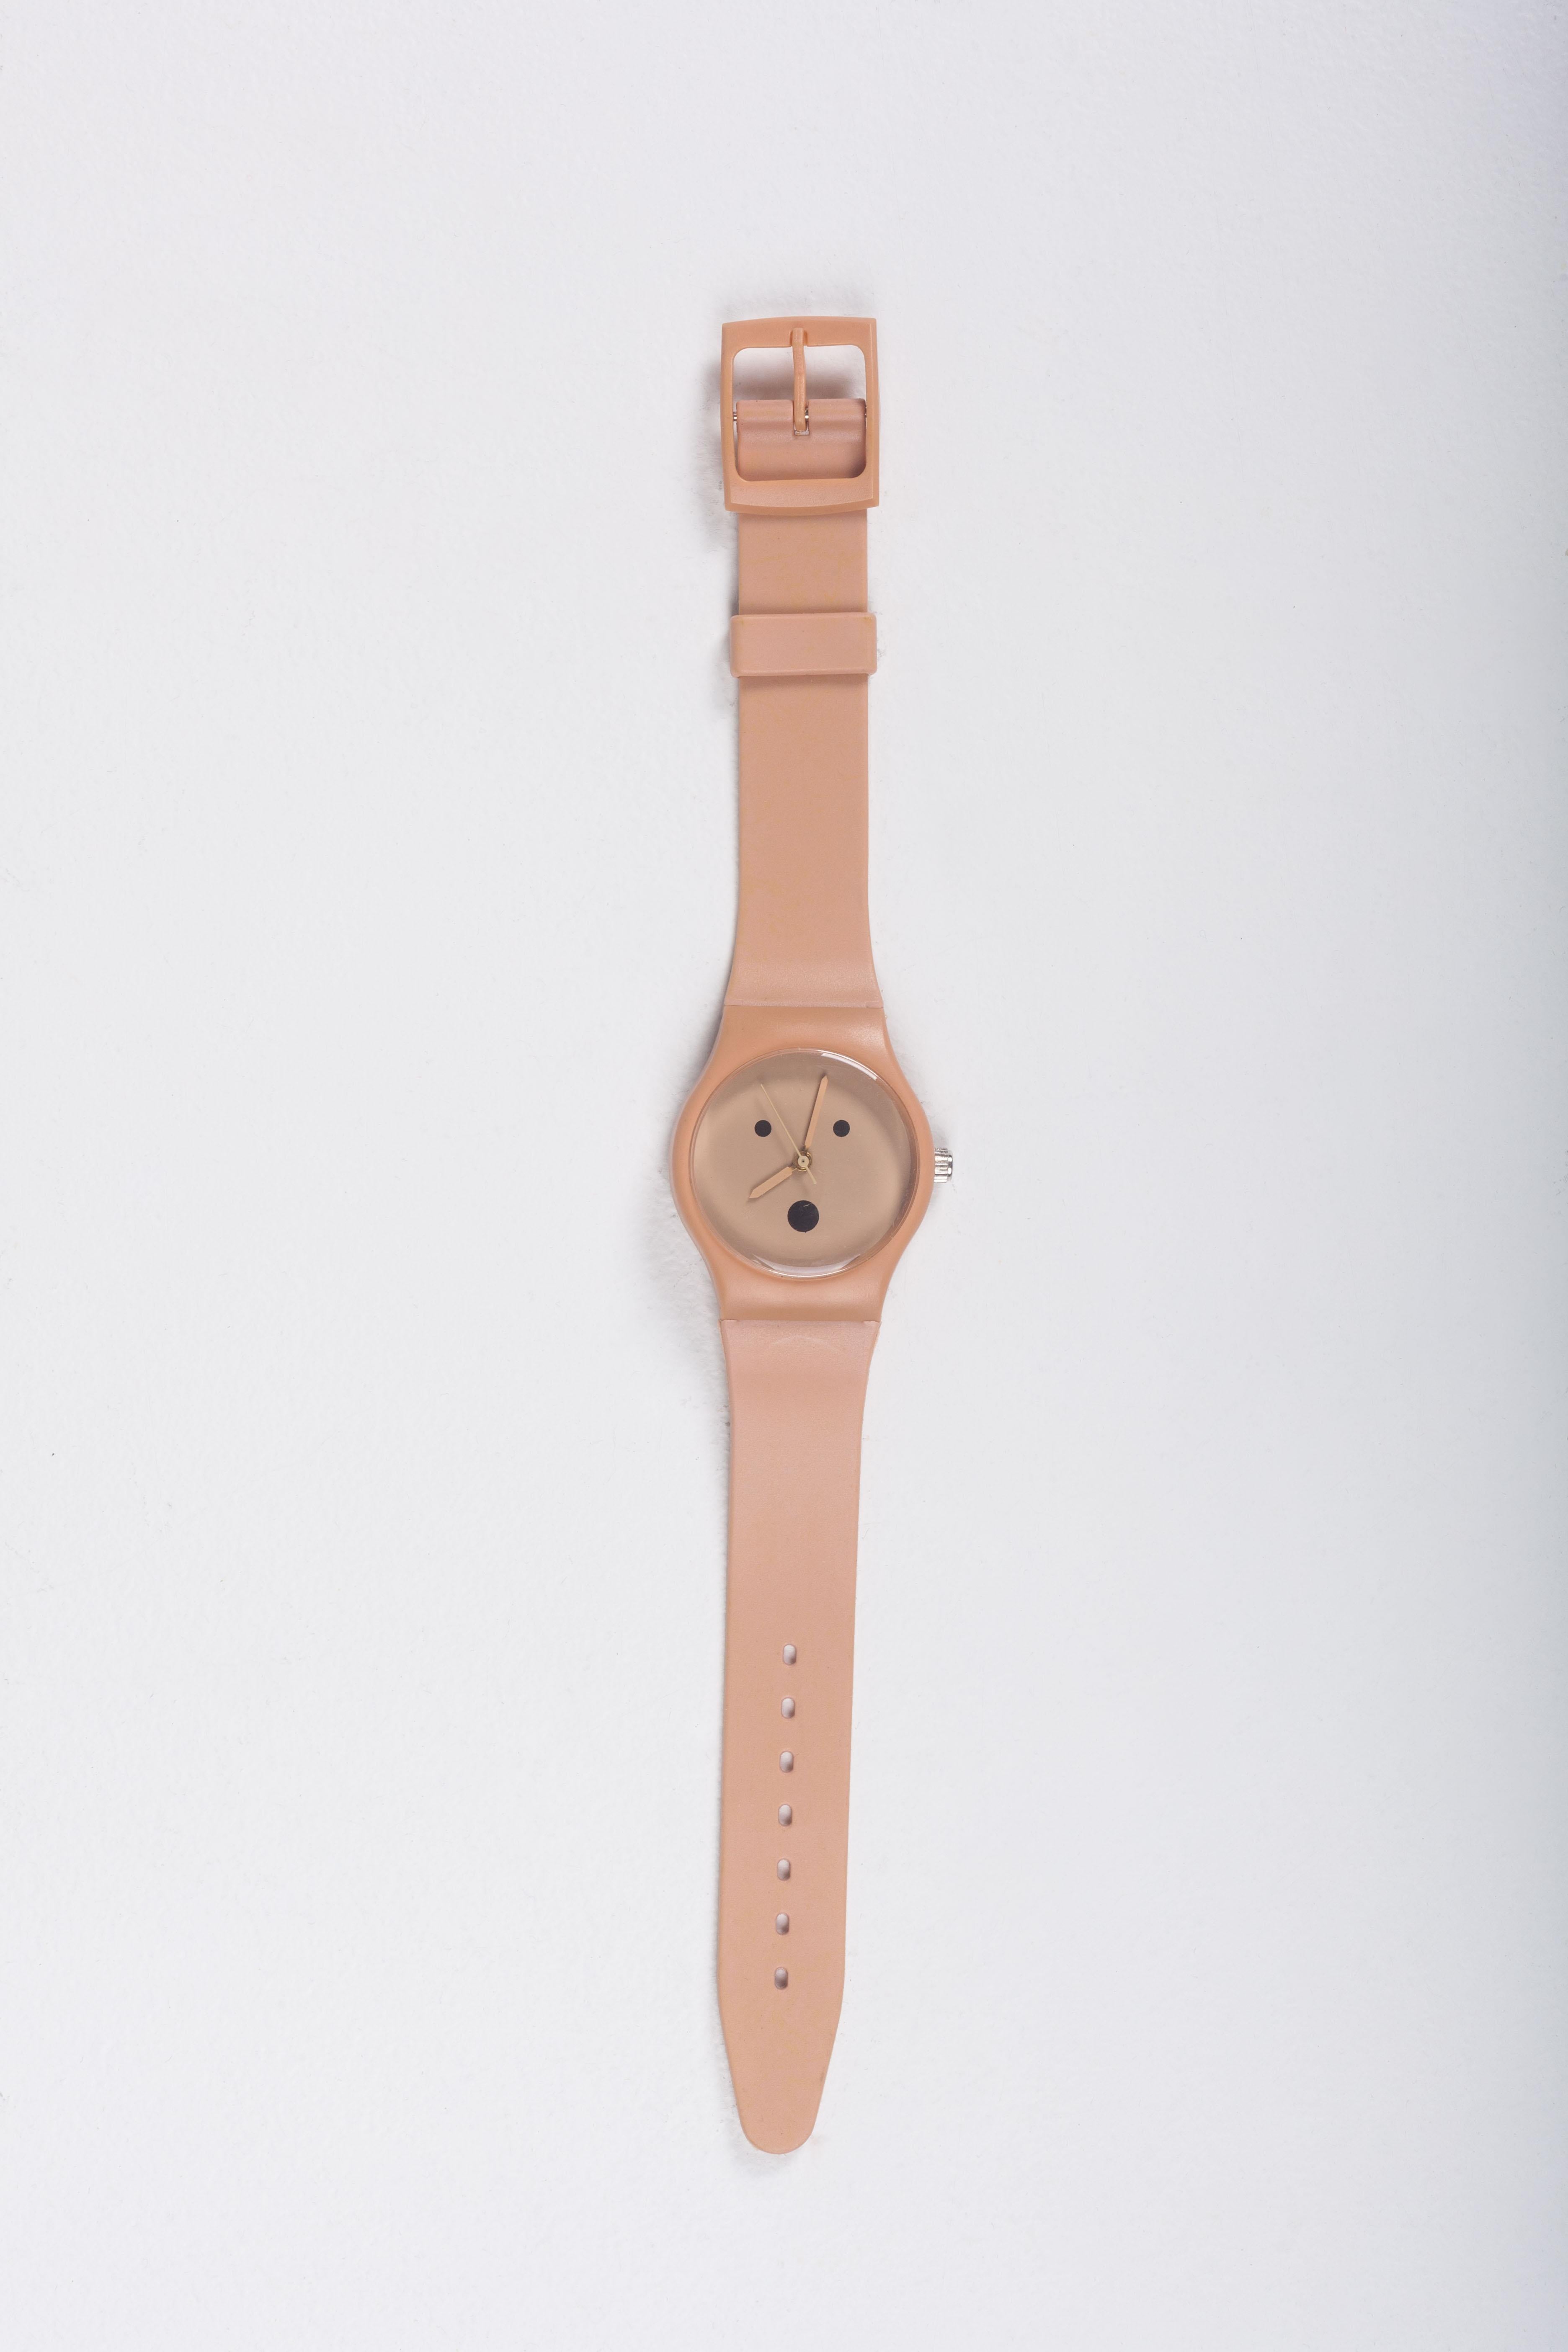 Italian Wristwatch “Ollo” by Museo Alchimia Alessandro Mendini, Italy, 1990 For Sale